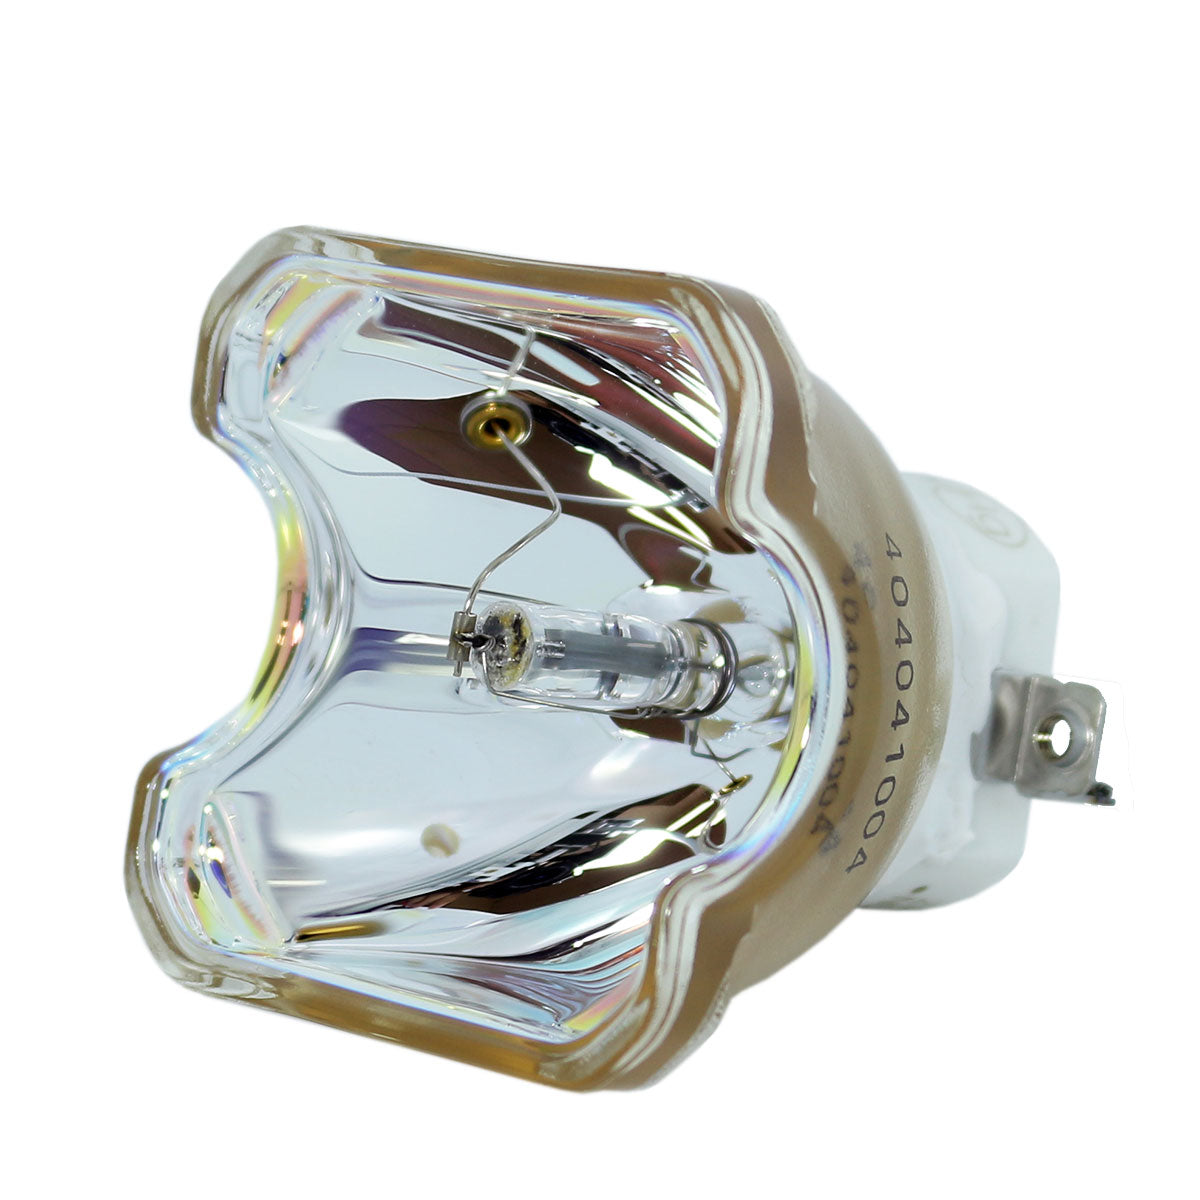 Viewsonic RBB-009H Ushio Projector Bare Lamp